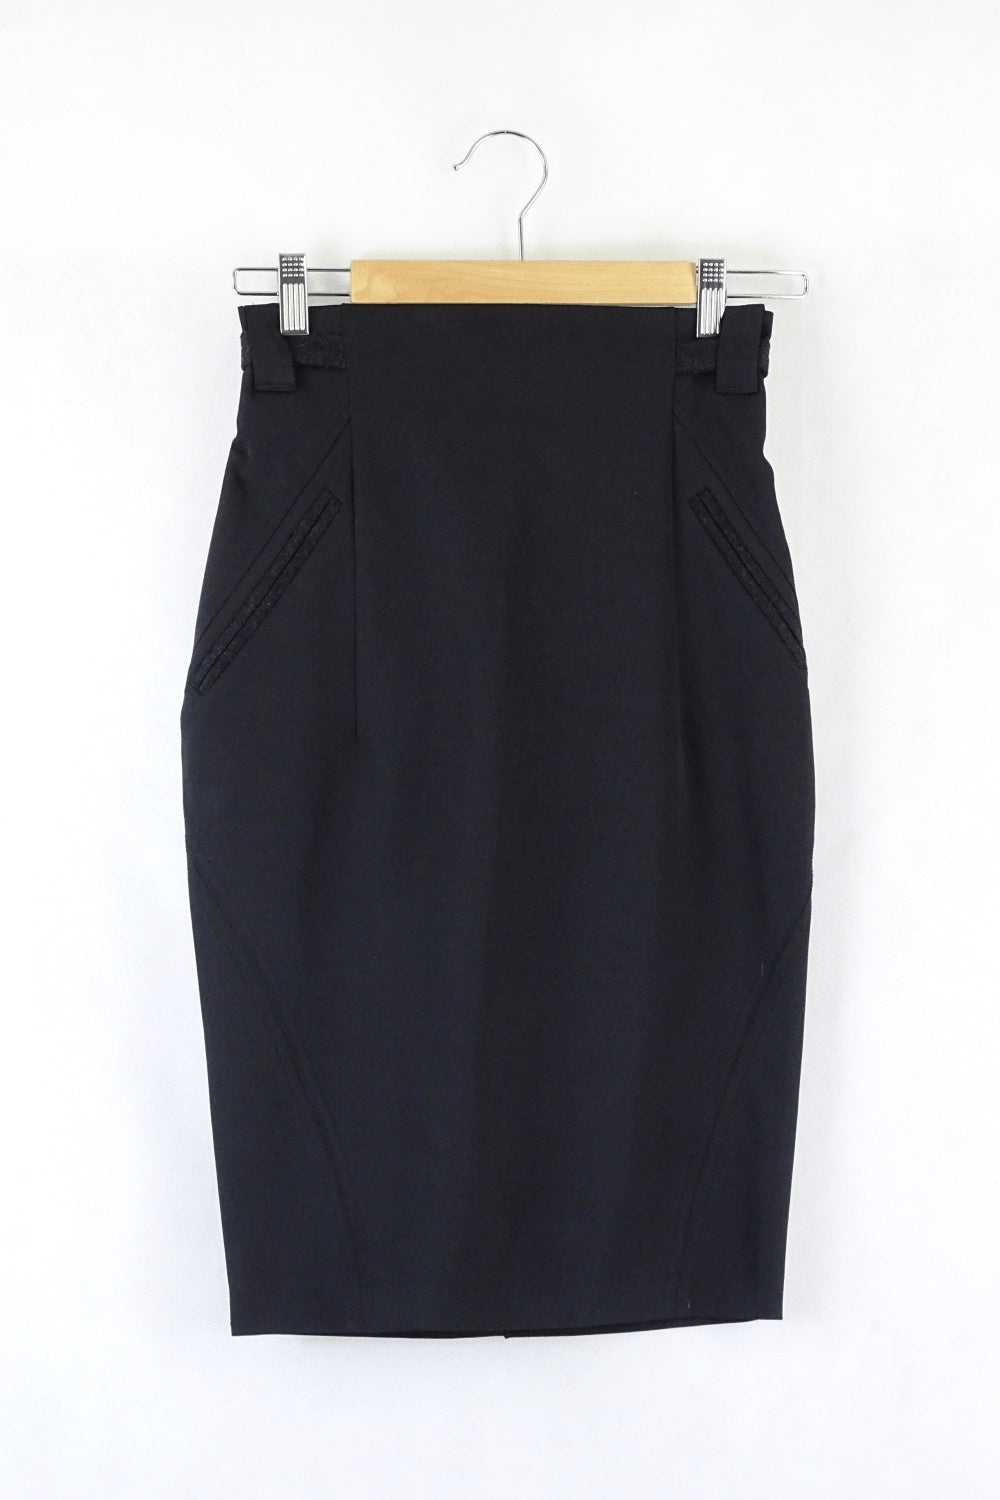 Annaaritan Concept Clothes Skirt 8